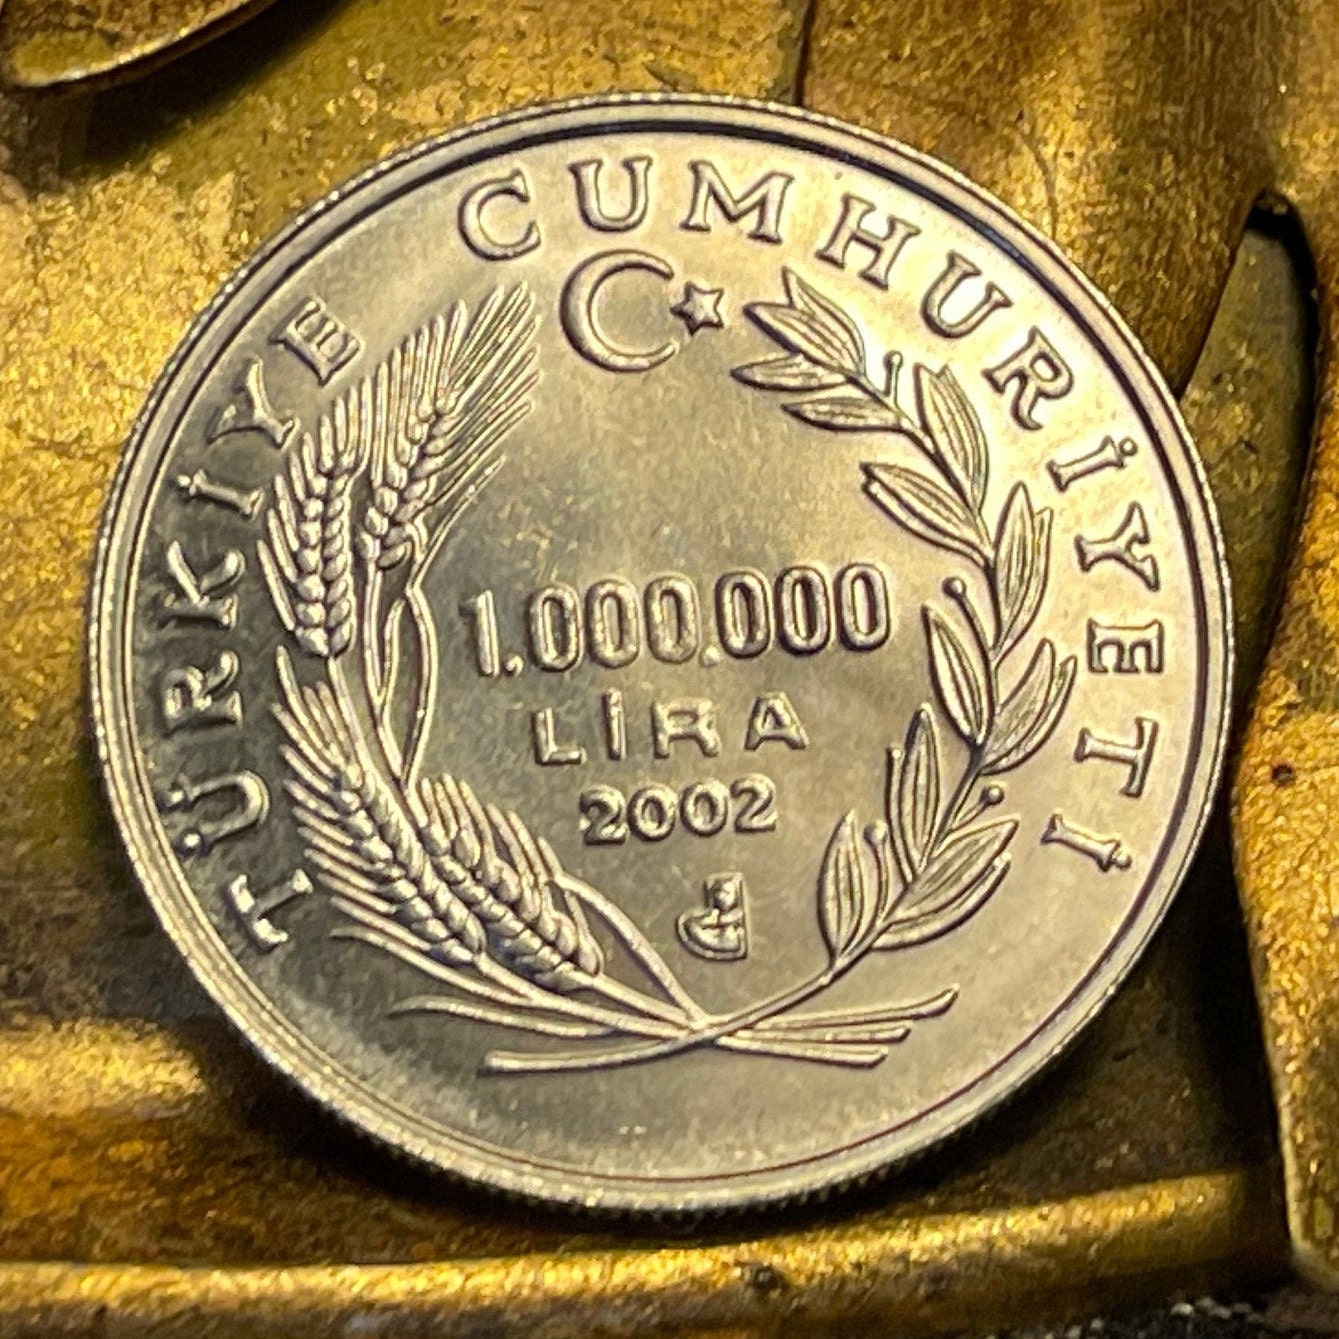 Yunus Dervish Million Lira Turkey Authentic Coin Money for Jewelry and Craft Making